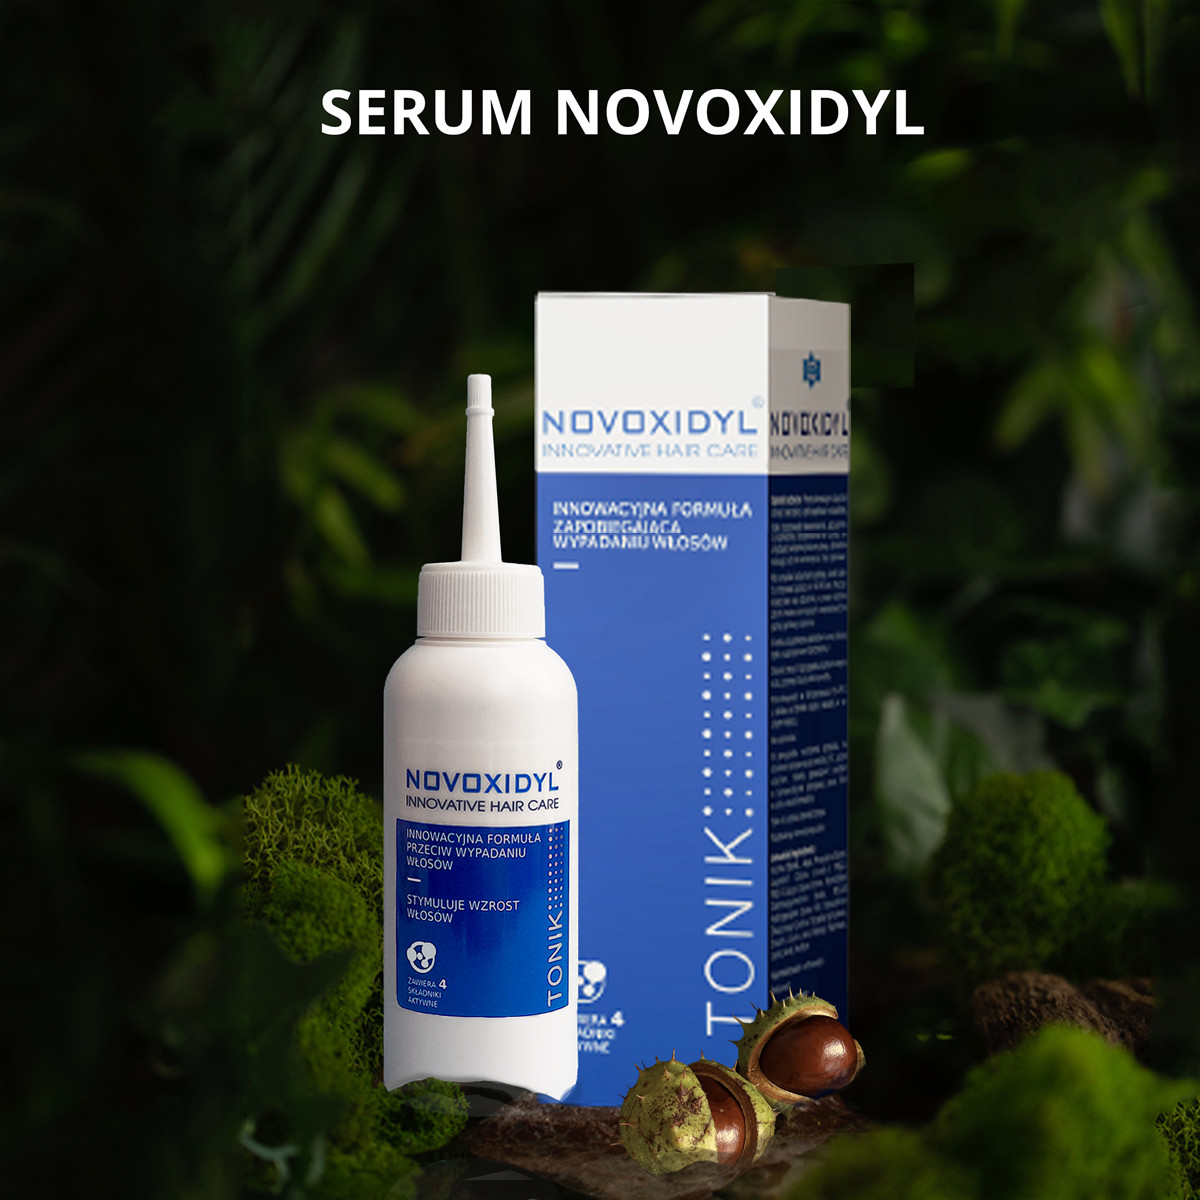 Serum y tế Novoxidyl hỗ trợ trị rụng tóc